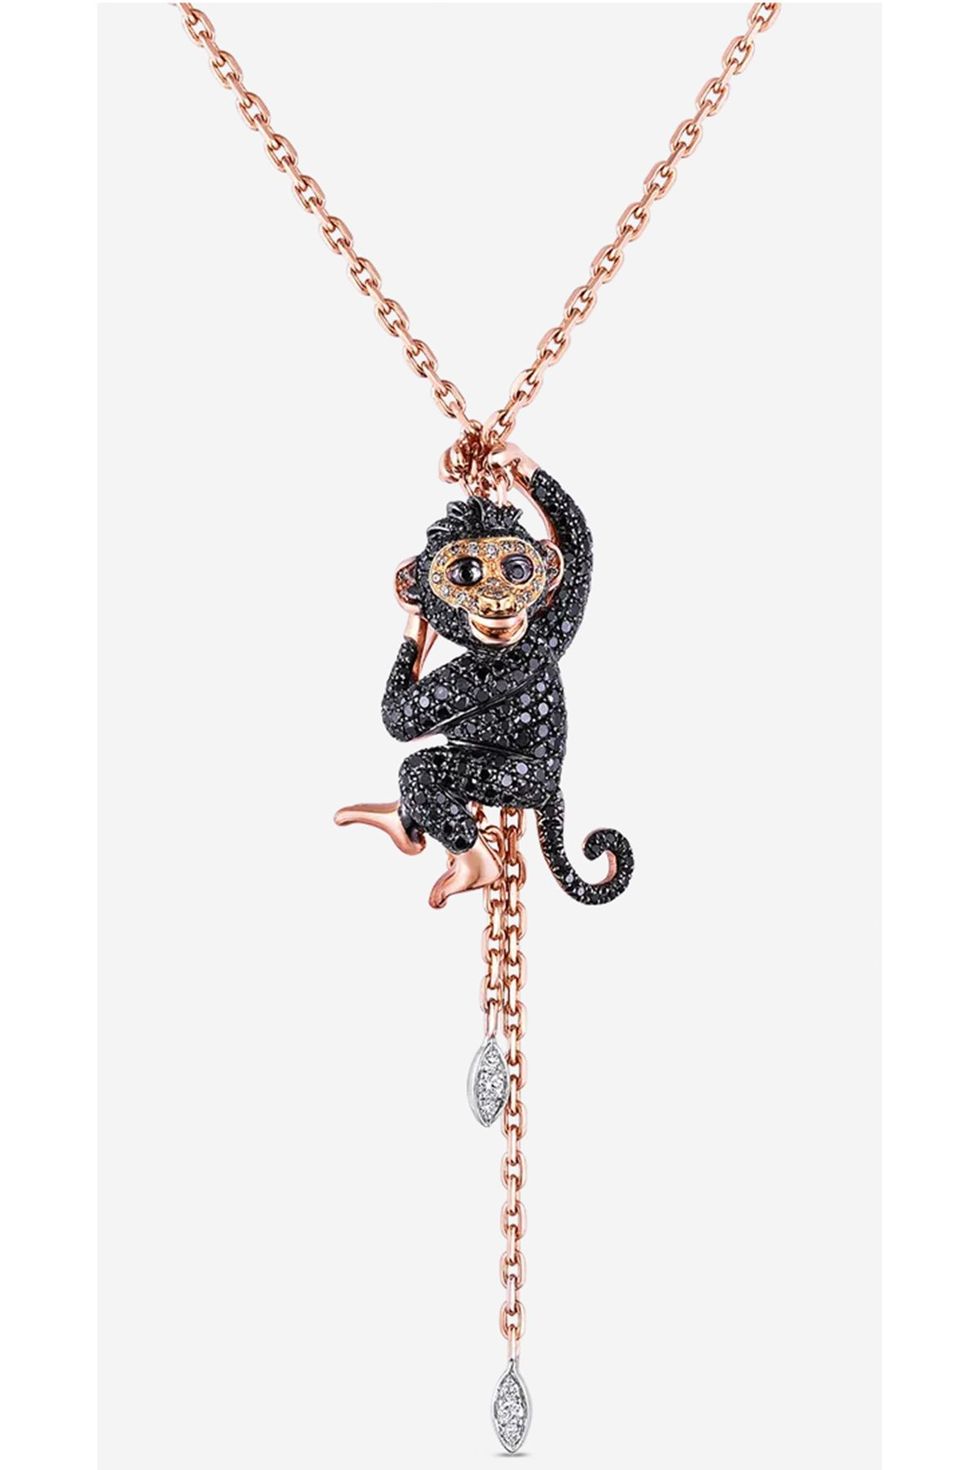 Monkey Pendant with Brown, Black, and White Diamonds